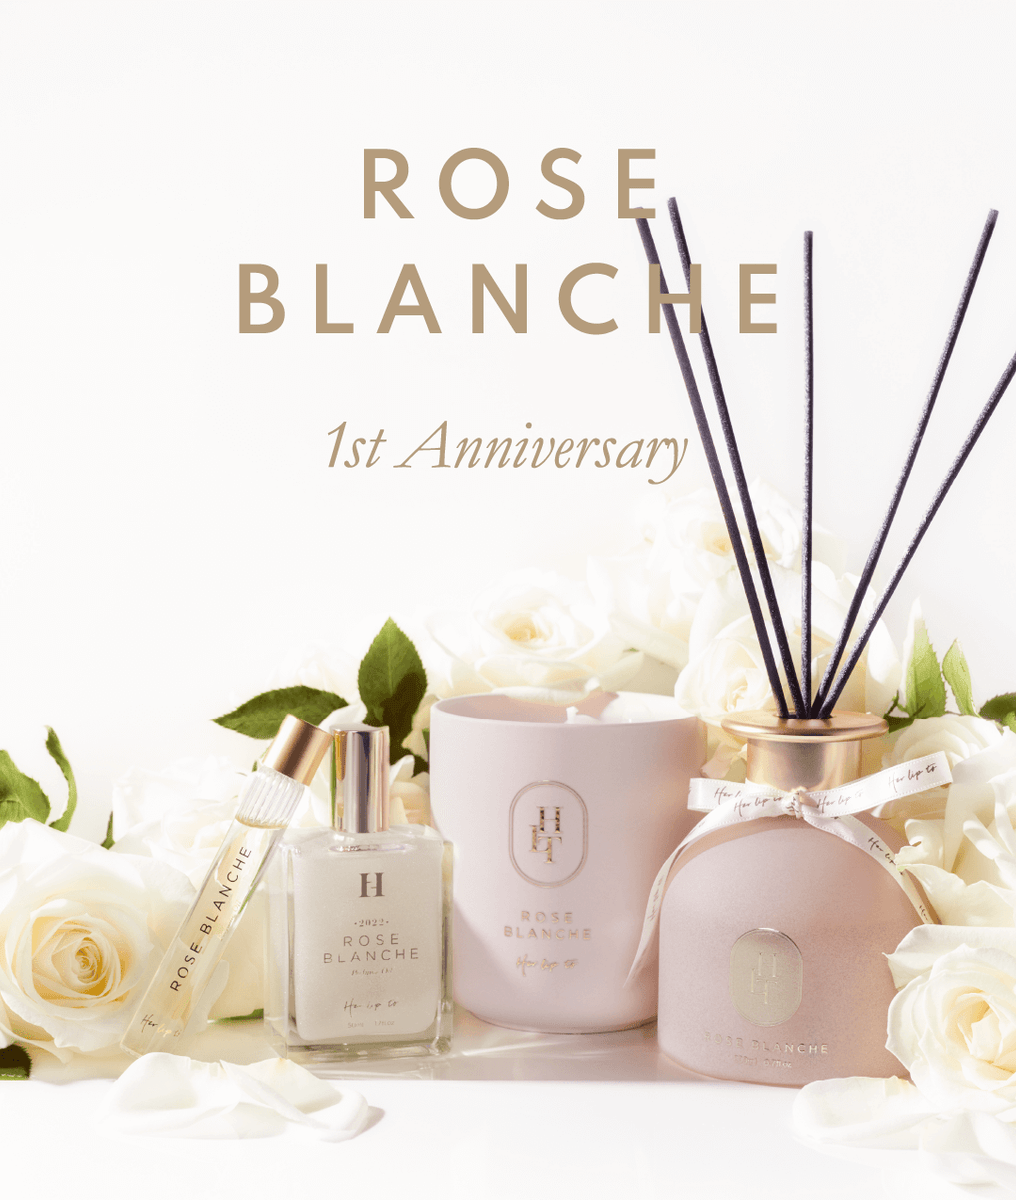 ROSE BLANCHE 1st Anniversary